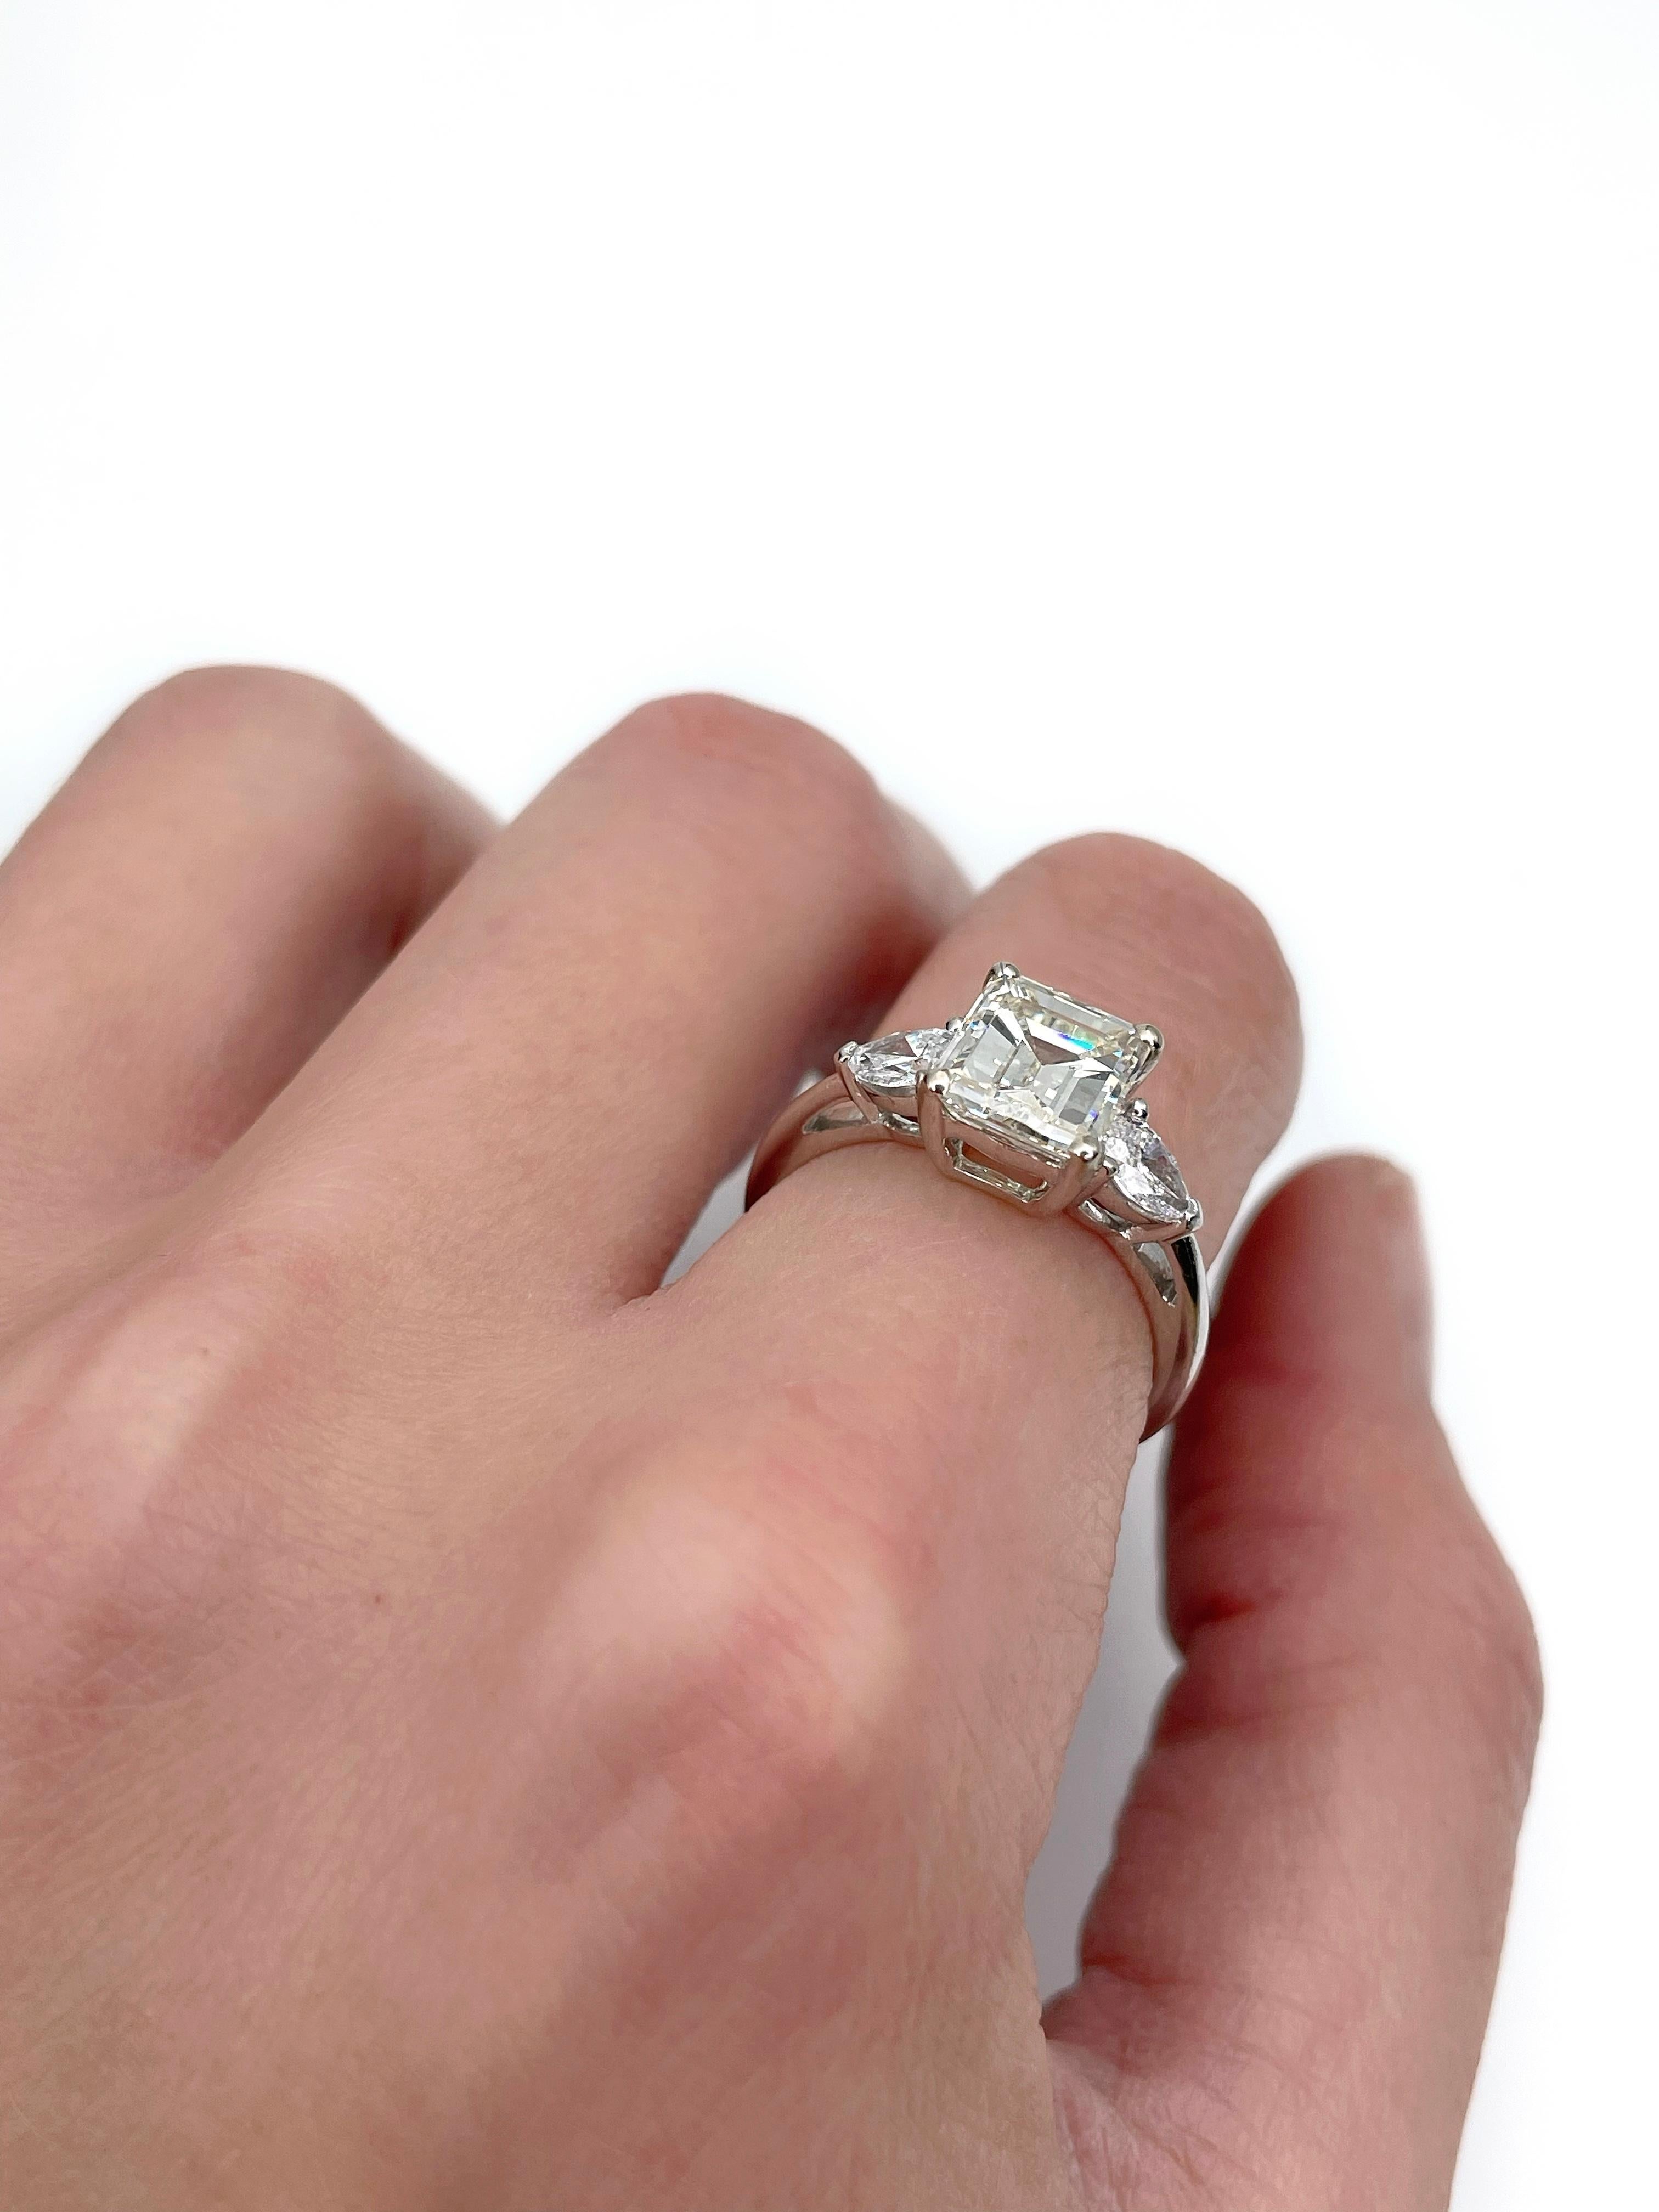 Certified 18 Karat Gold 2.03 Carat Diamond Emerald Cut VVS2 Engagement Ring 3